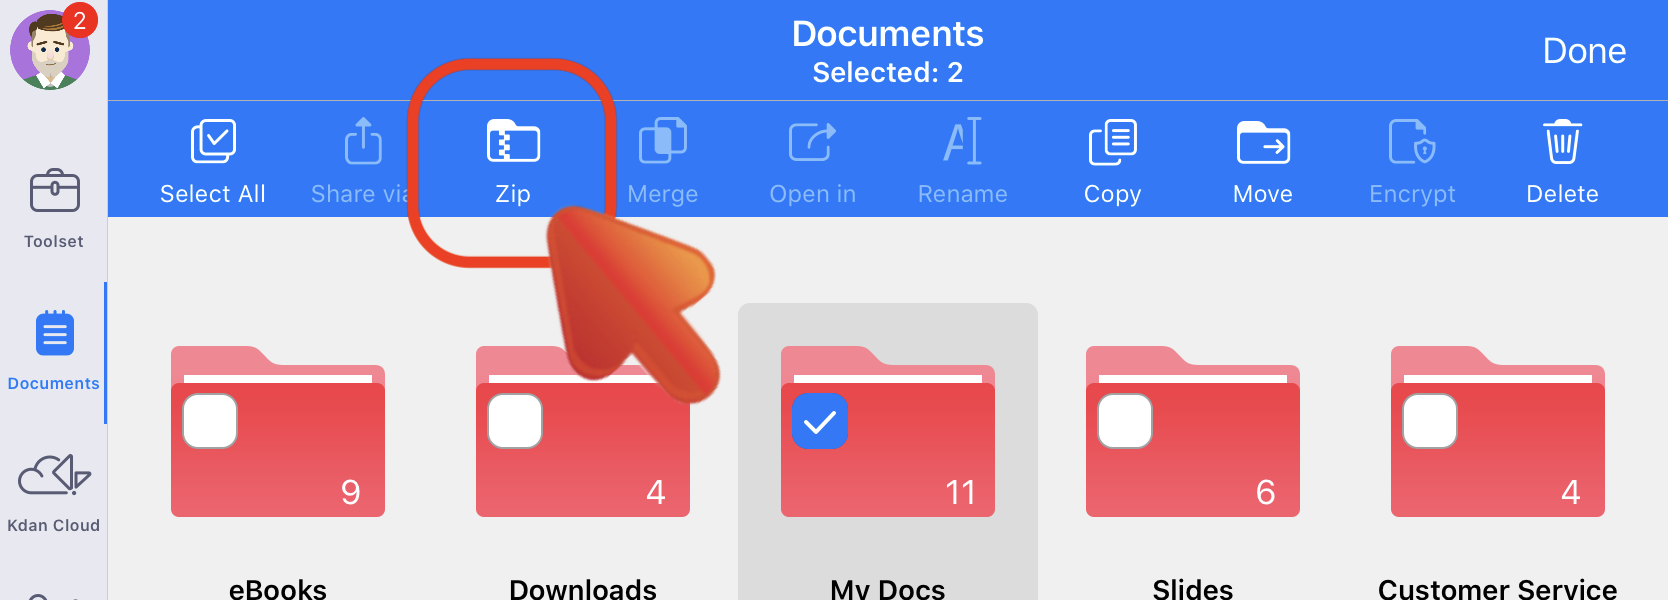 PDF_iPad_Documents_Edit_Zip.PNG